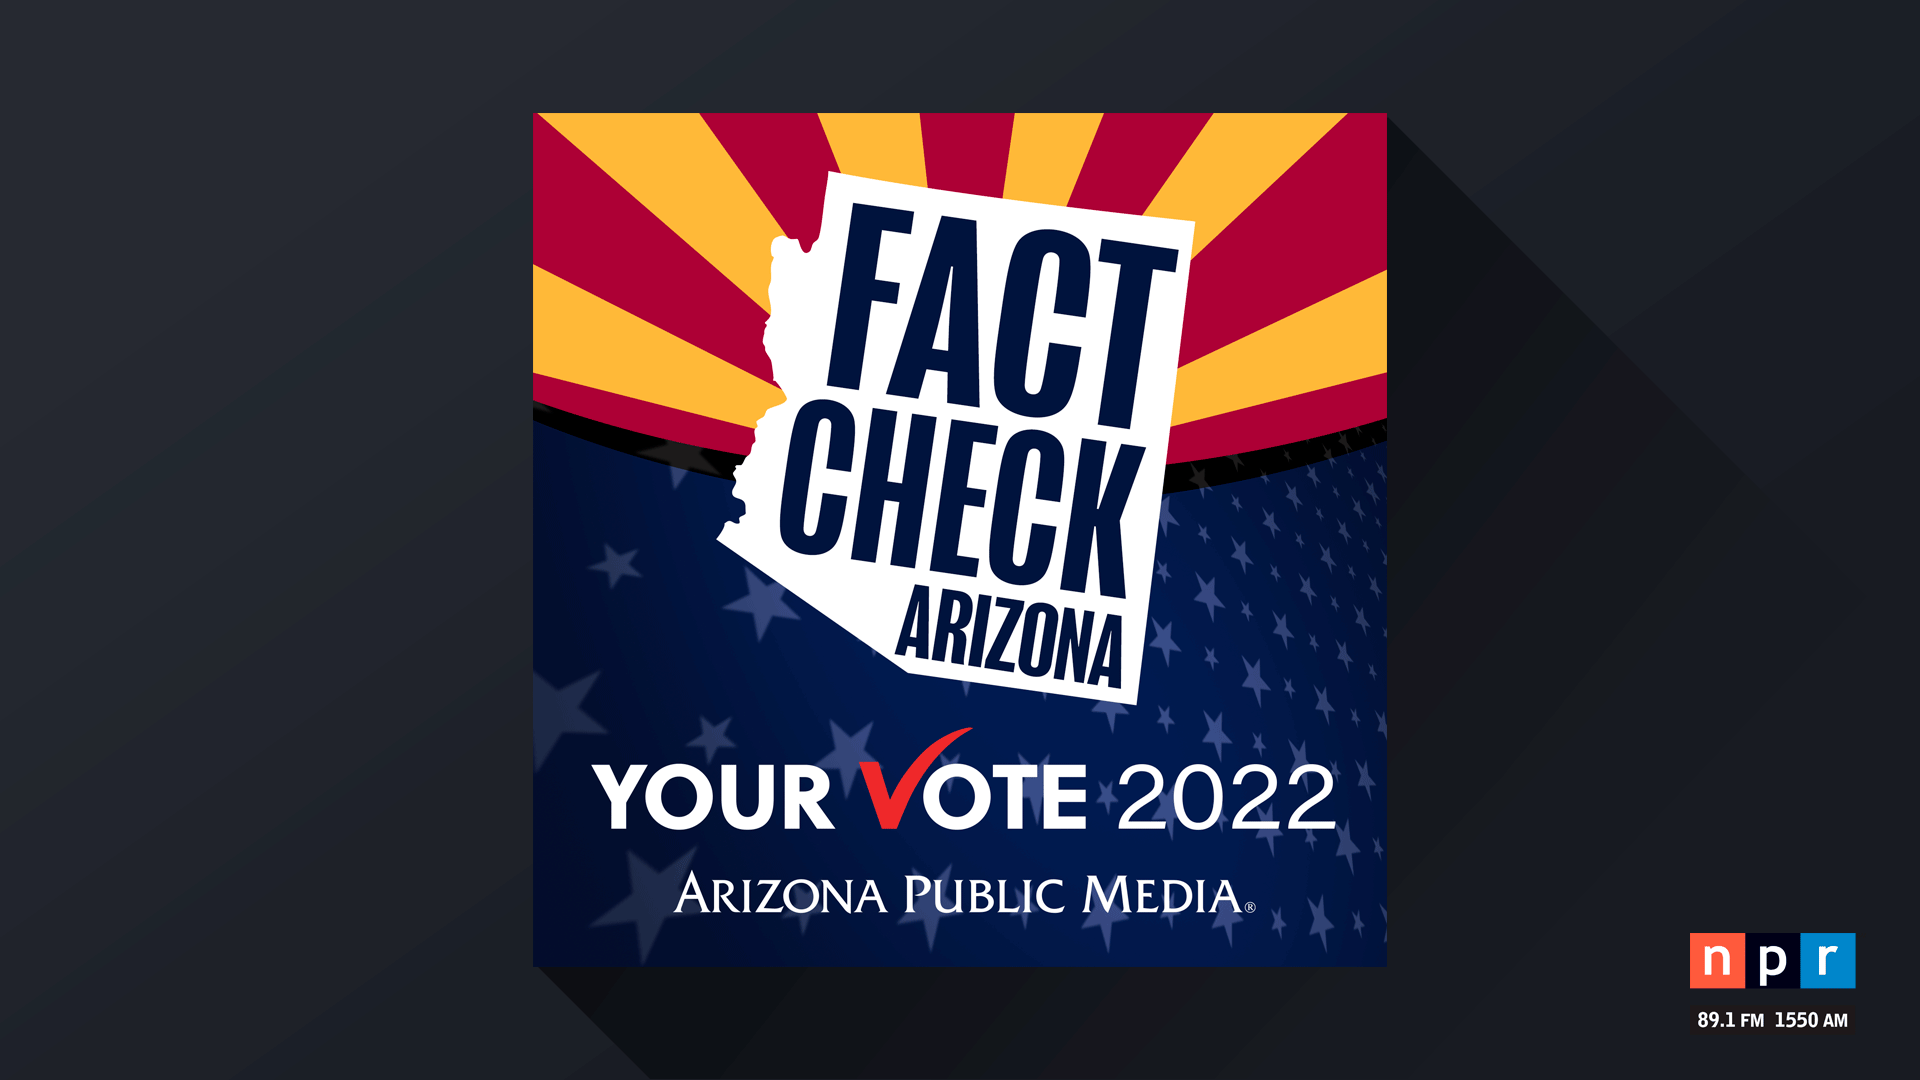 The Fact Check Arizona podcast will cover the 2022 Arizona election season.